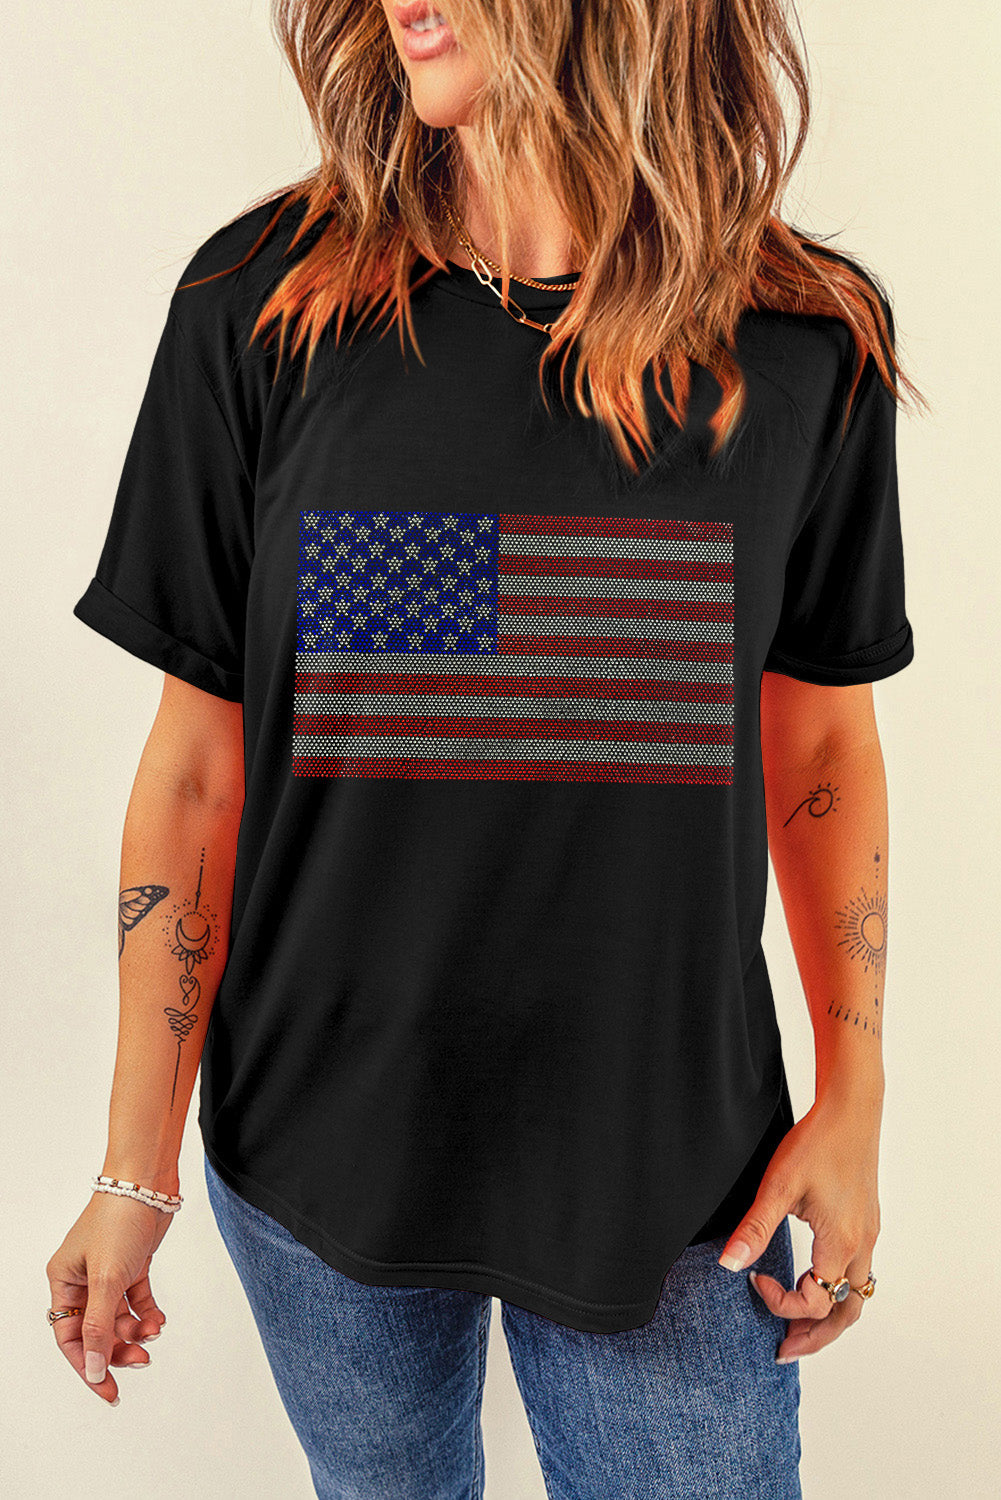 Black Rhinestone American Flag Round Neck Casual Tee Graphic Tees JT's Designer Fashion